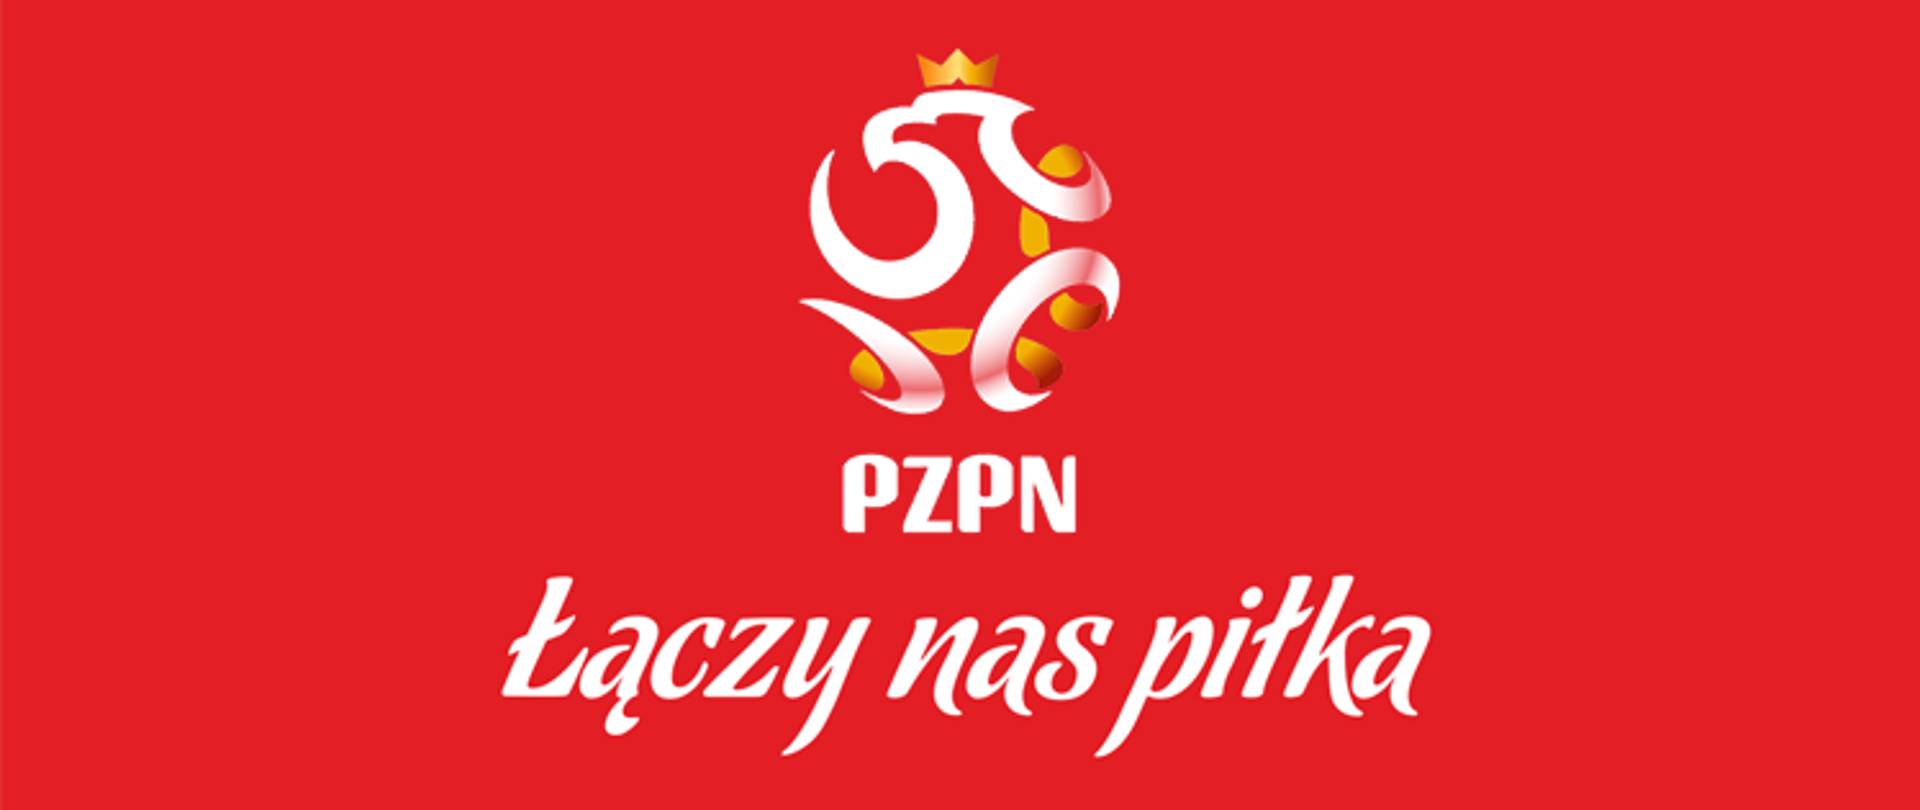 fot. PZPN laczynaspilka.pl